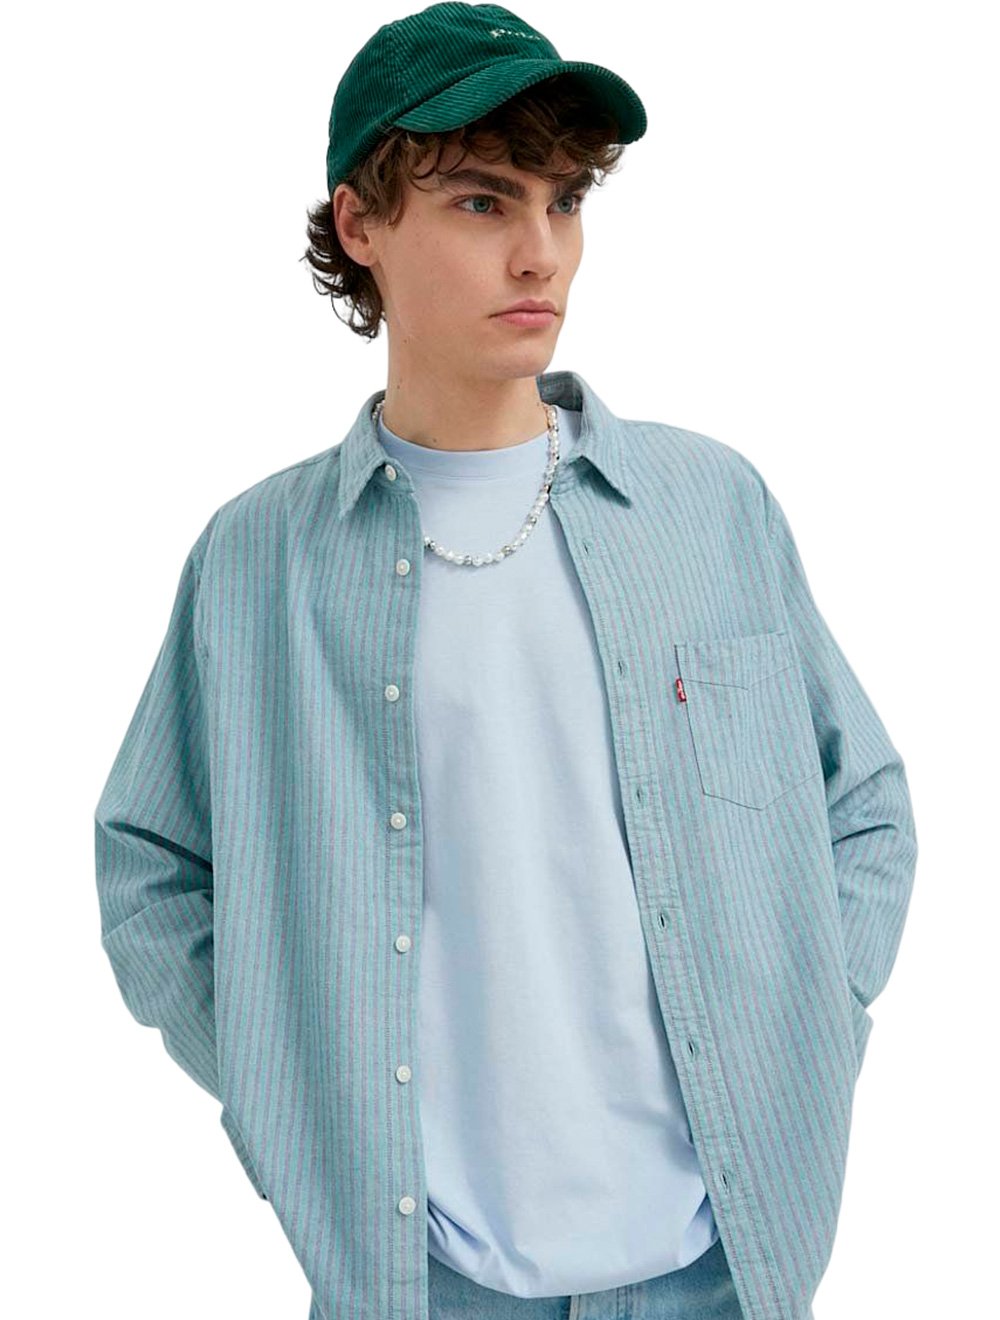 Camisa Levis Masculina Standart Sunset One Pocket Stripes Azul e Verde Claro